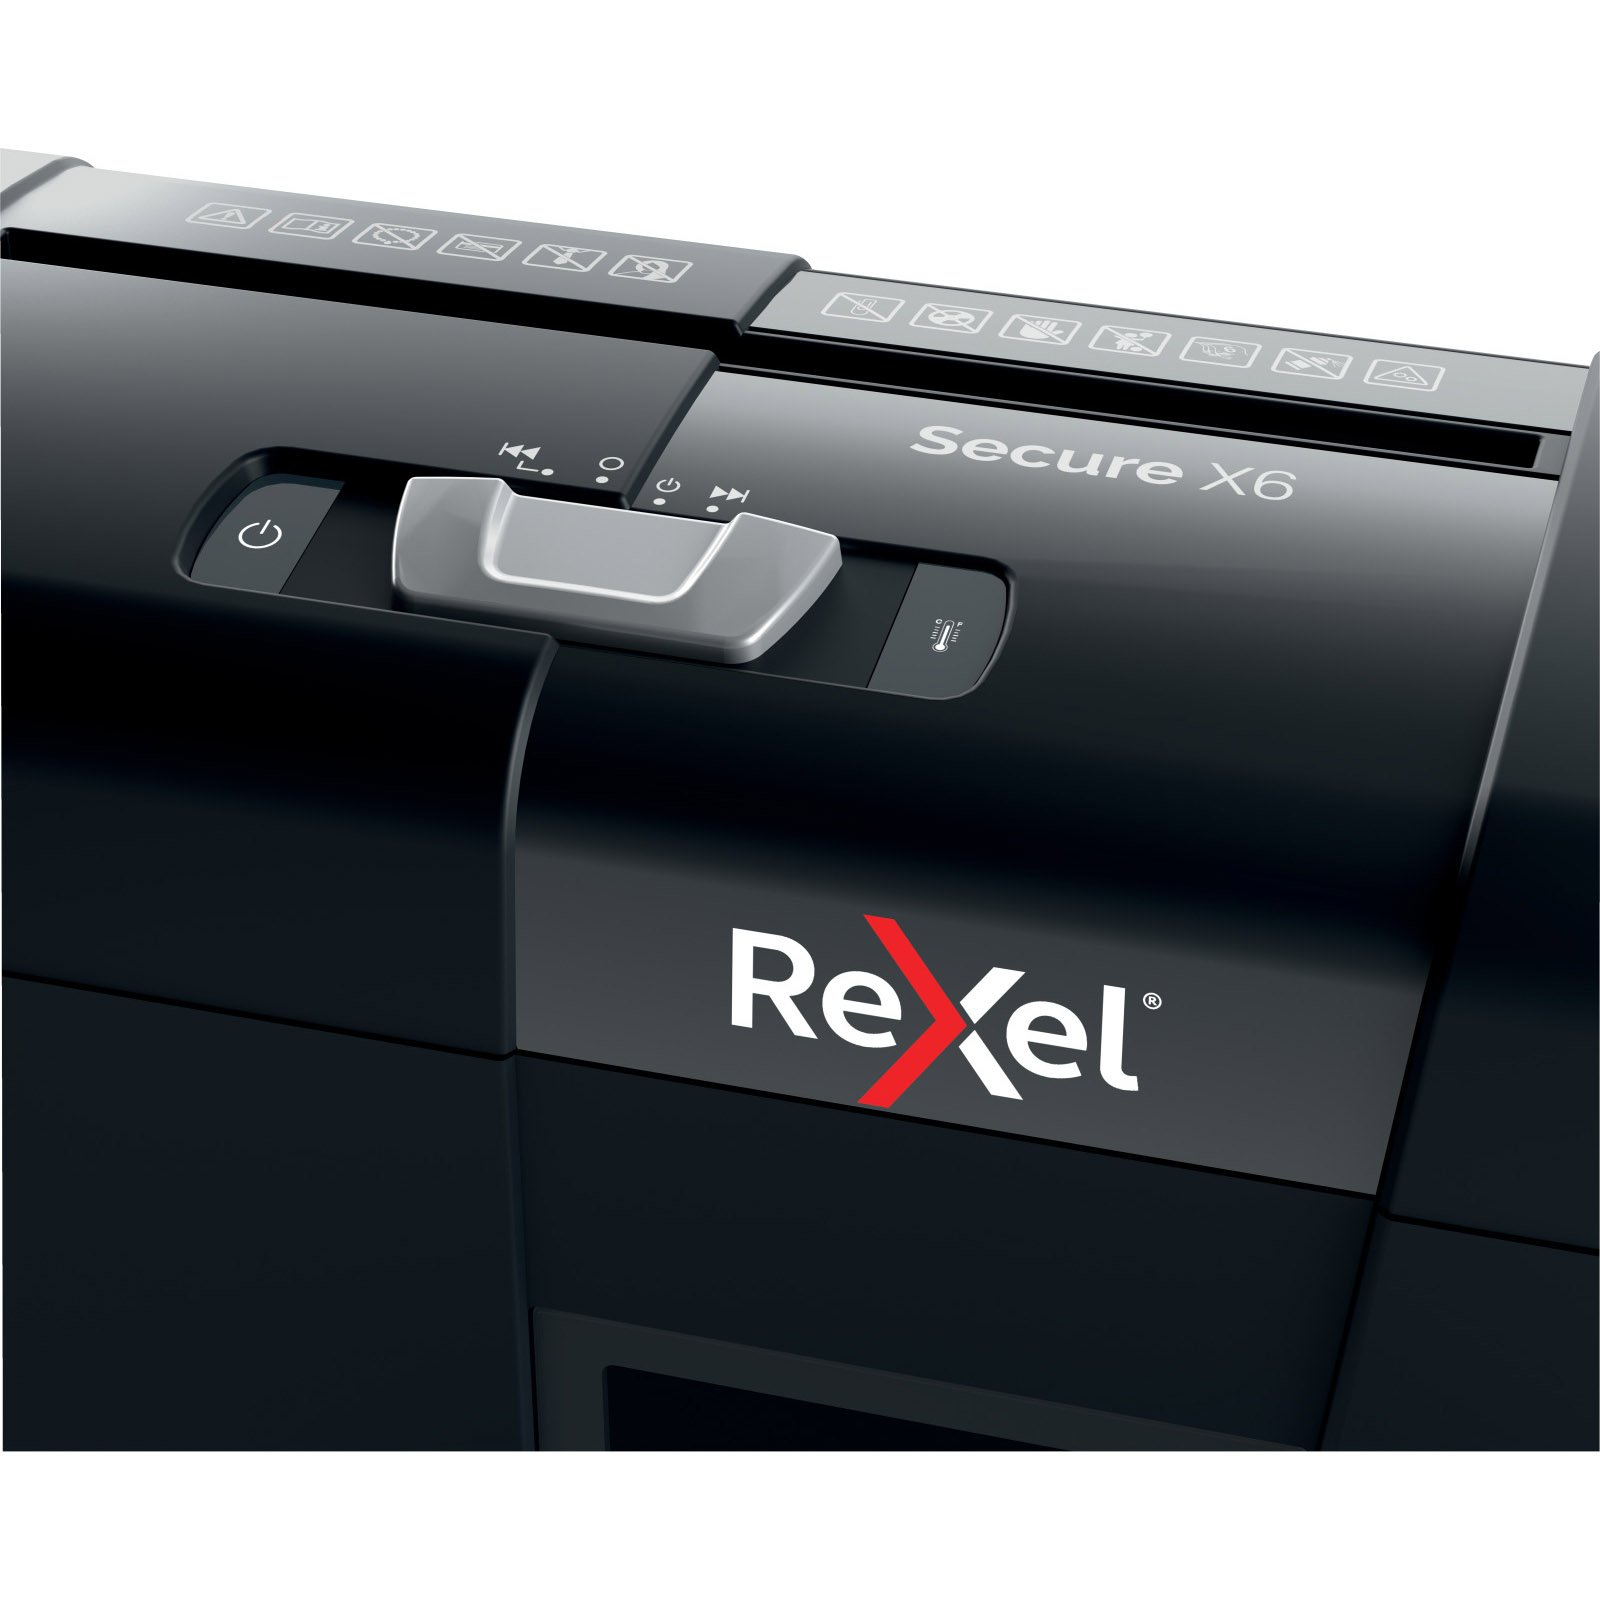 Rexel Secure X6 makulator X6 10 l